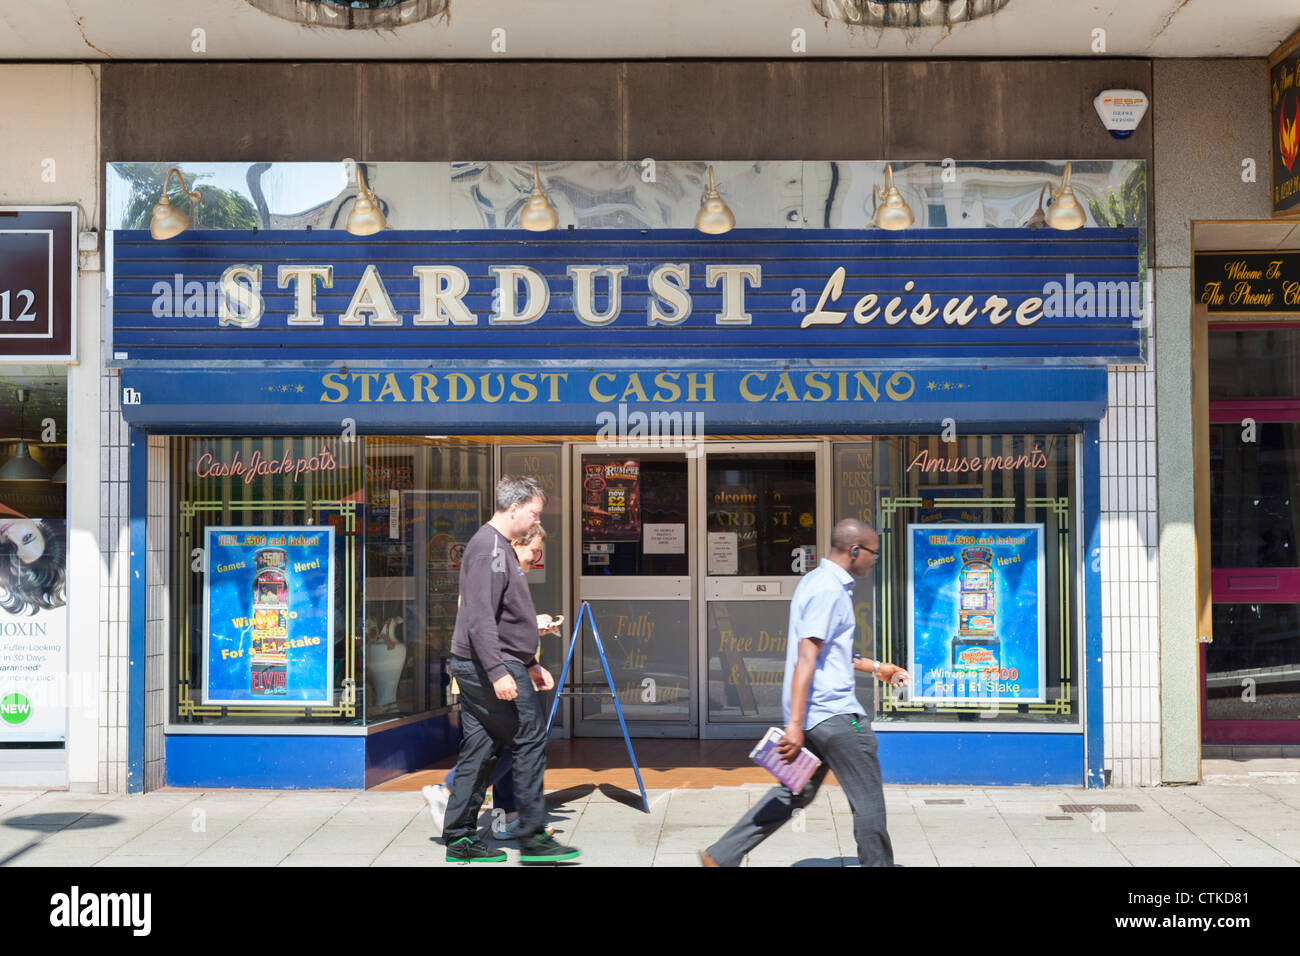 Stardust leisure cash casino high street shop front Stock Photo